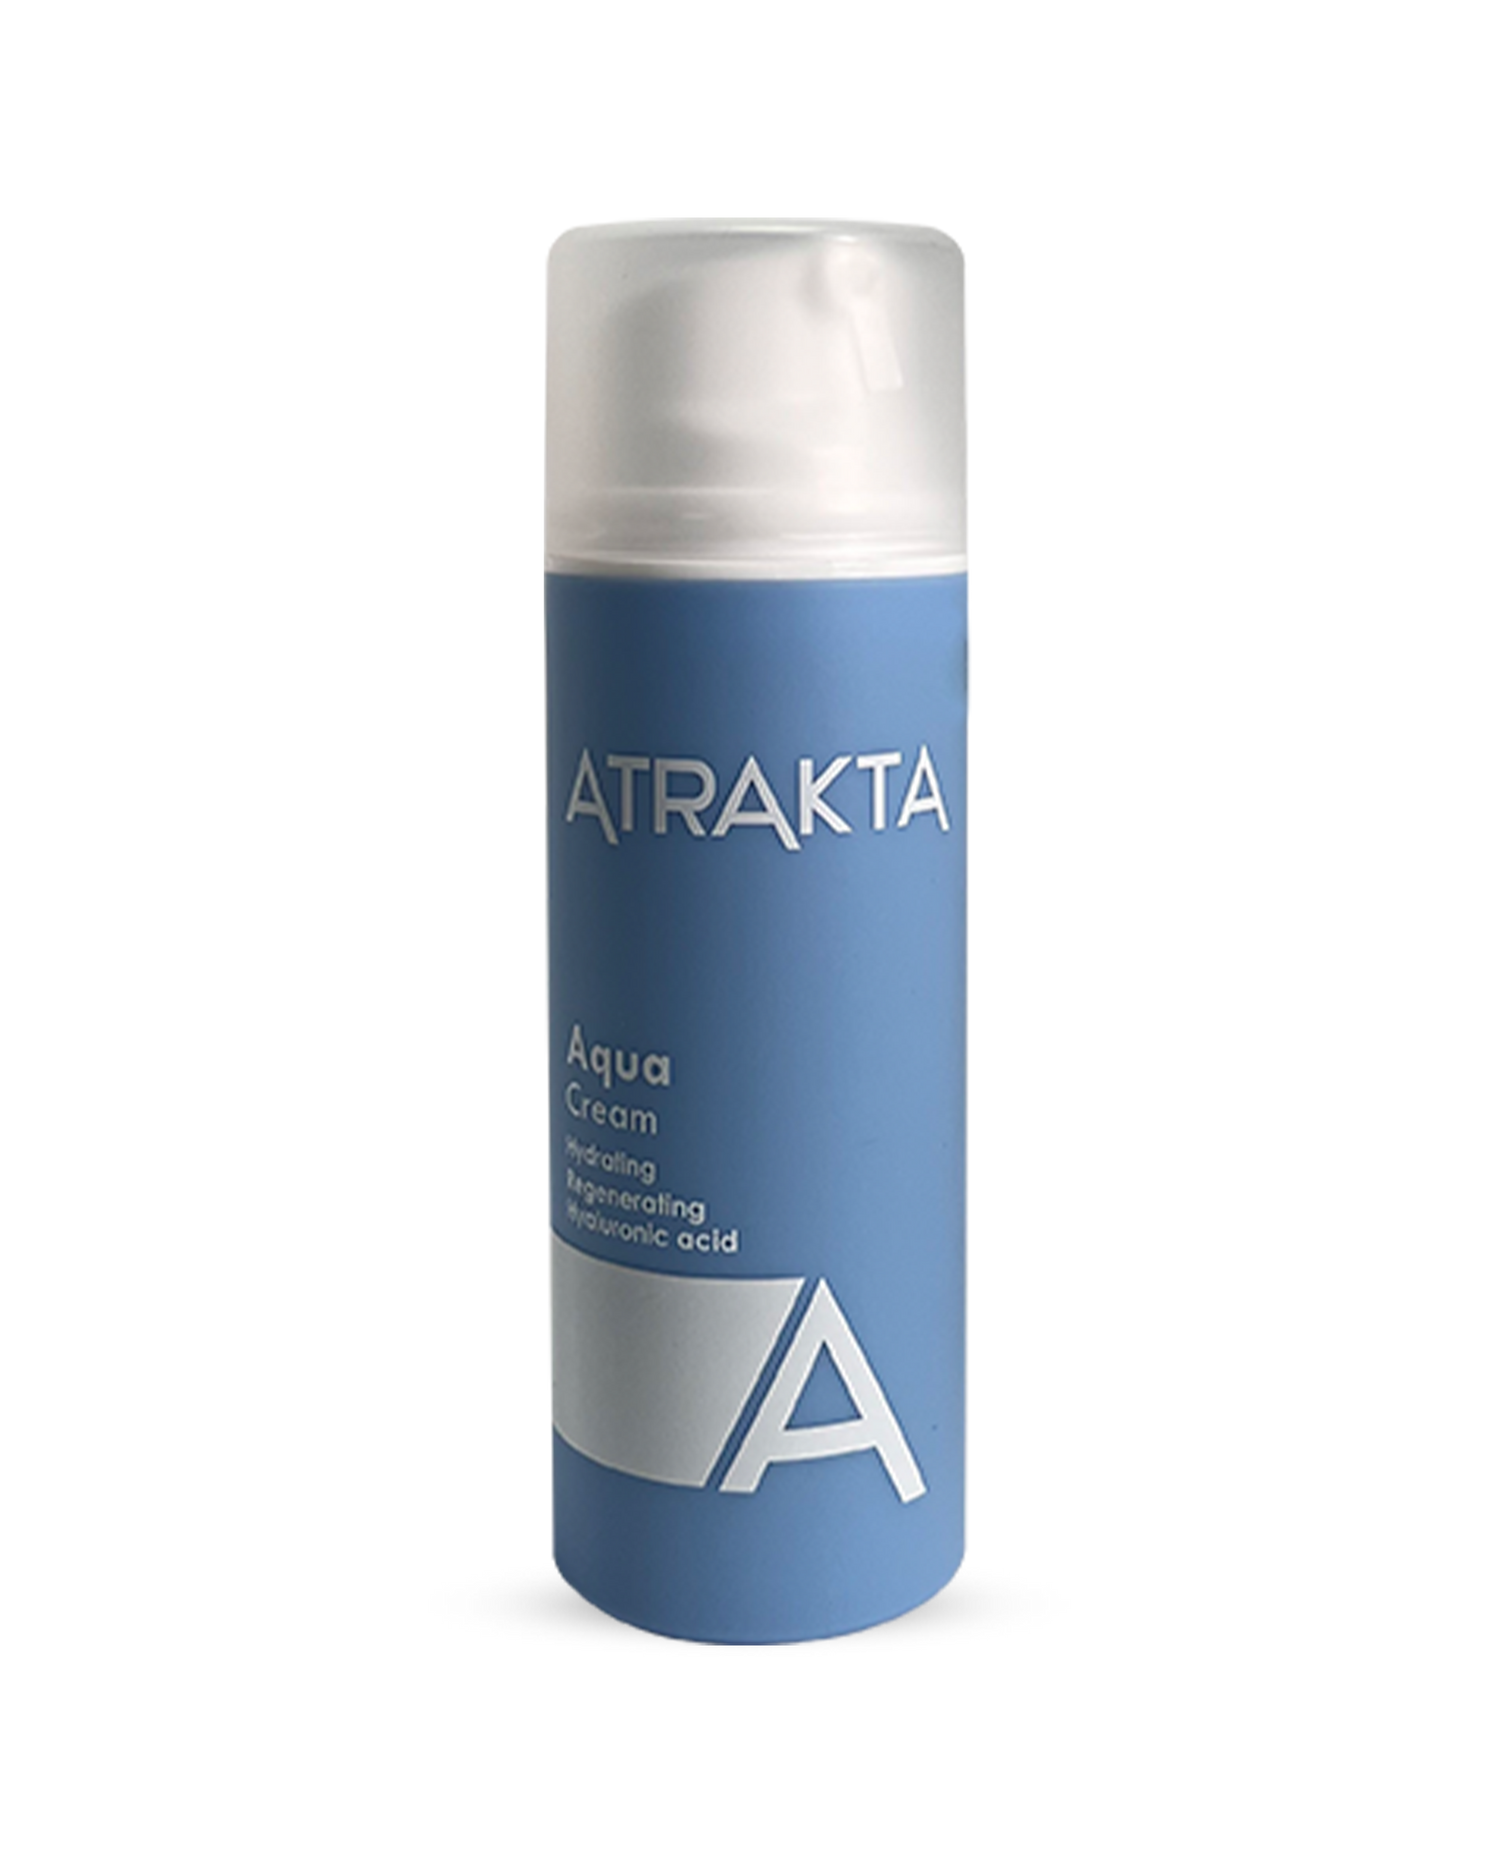 Atrakta Aqua Cream